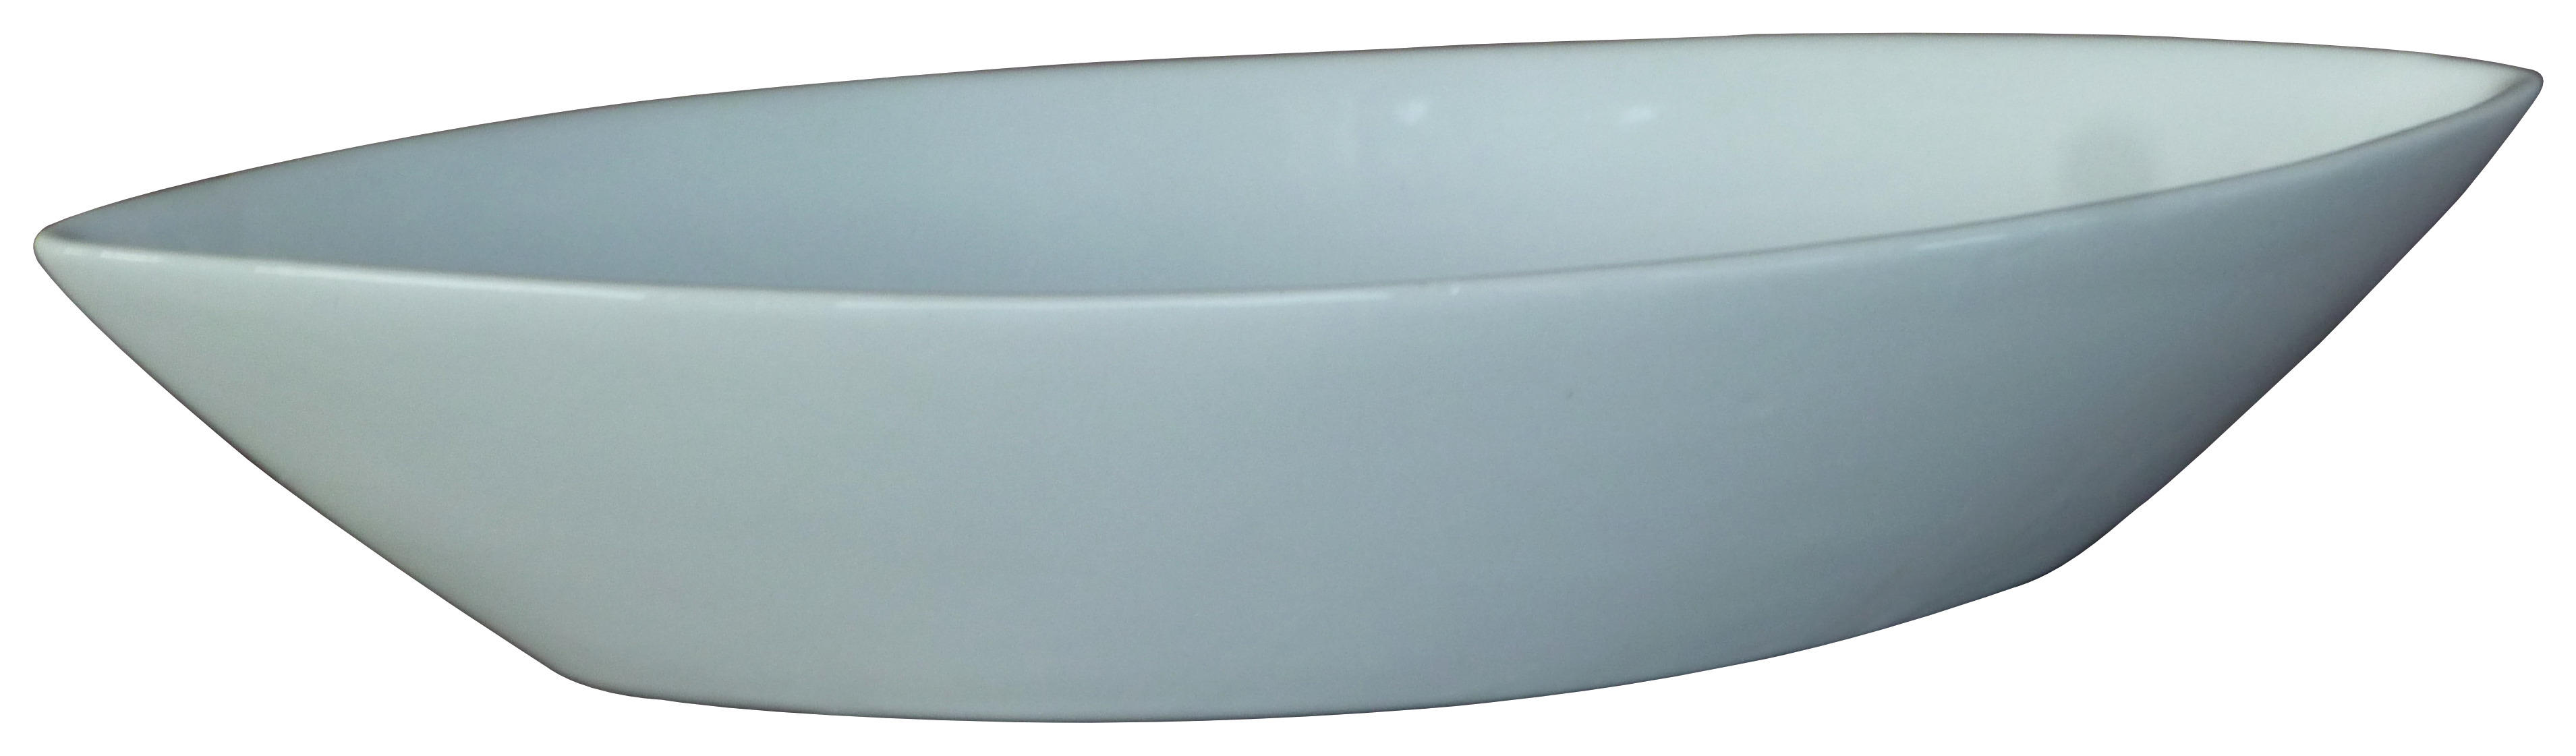 Wellco Schale weiß Porzellan B/H/L: ca. 30x5,5x12,5 cm Schale_Büfett - weiß (12,50/30,00/5,50cm)